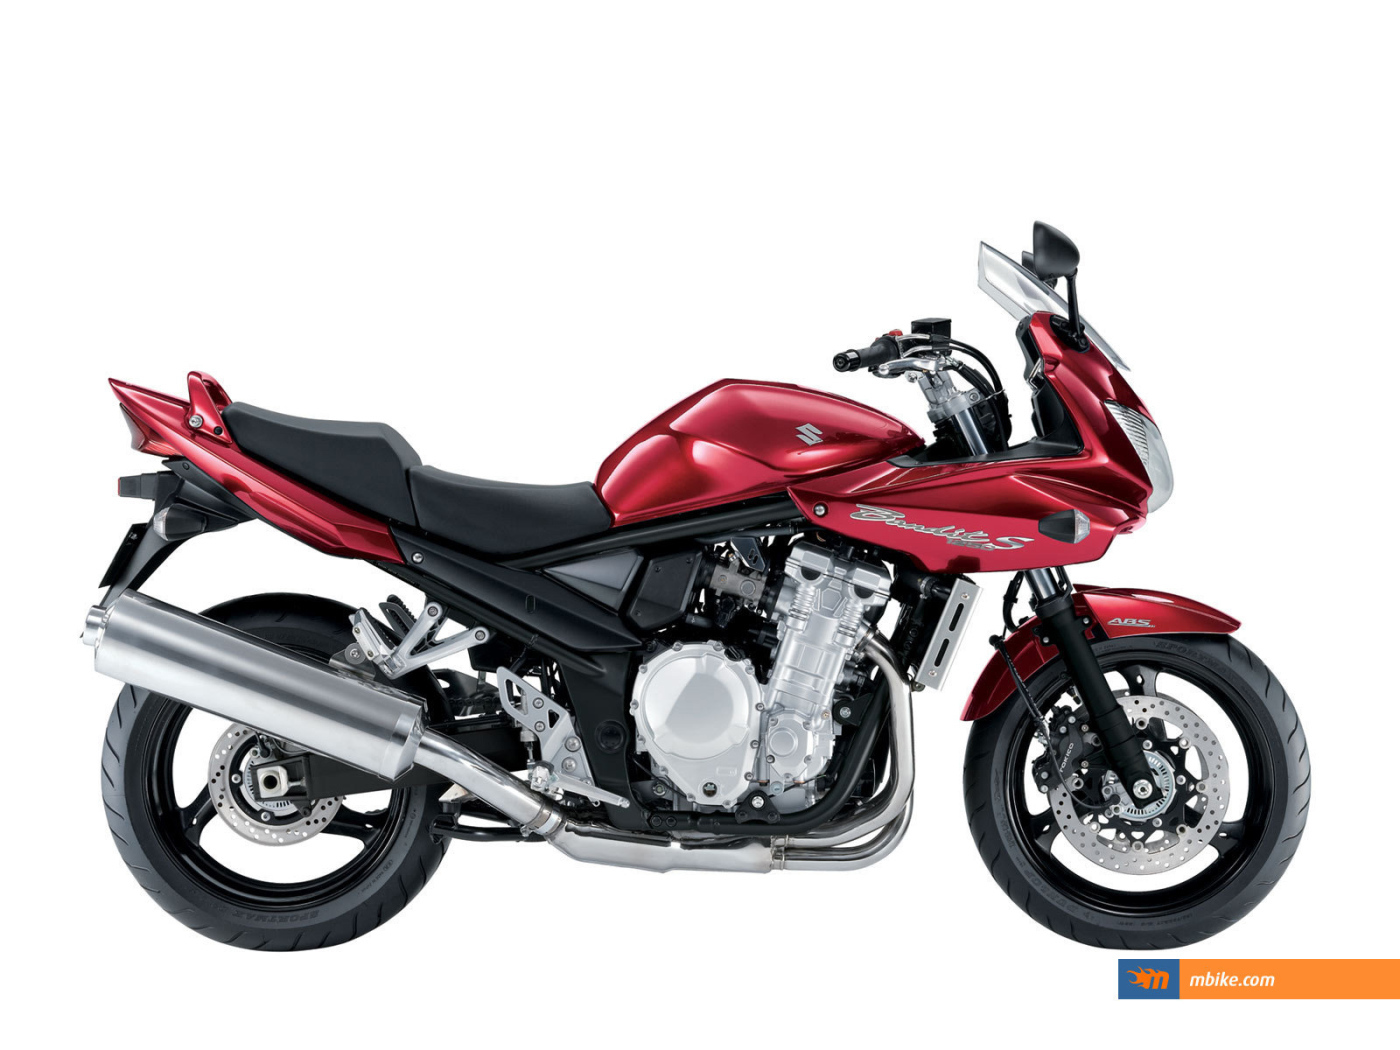 Новый мотоцикл Suzuki GSF 1250 S